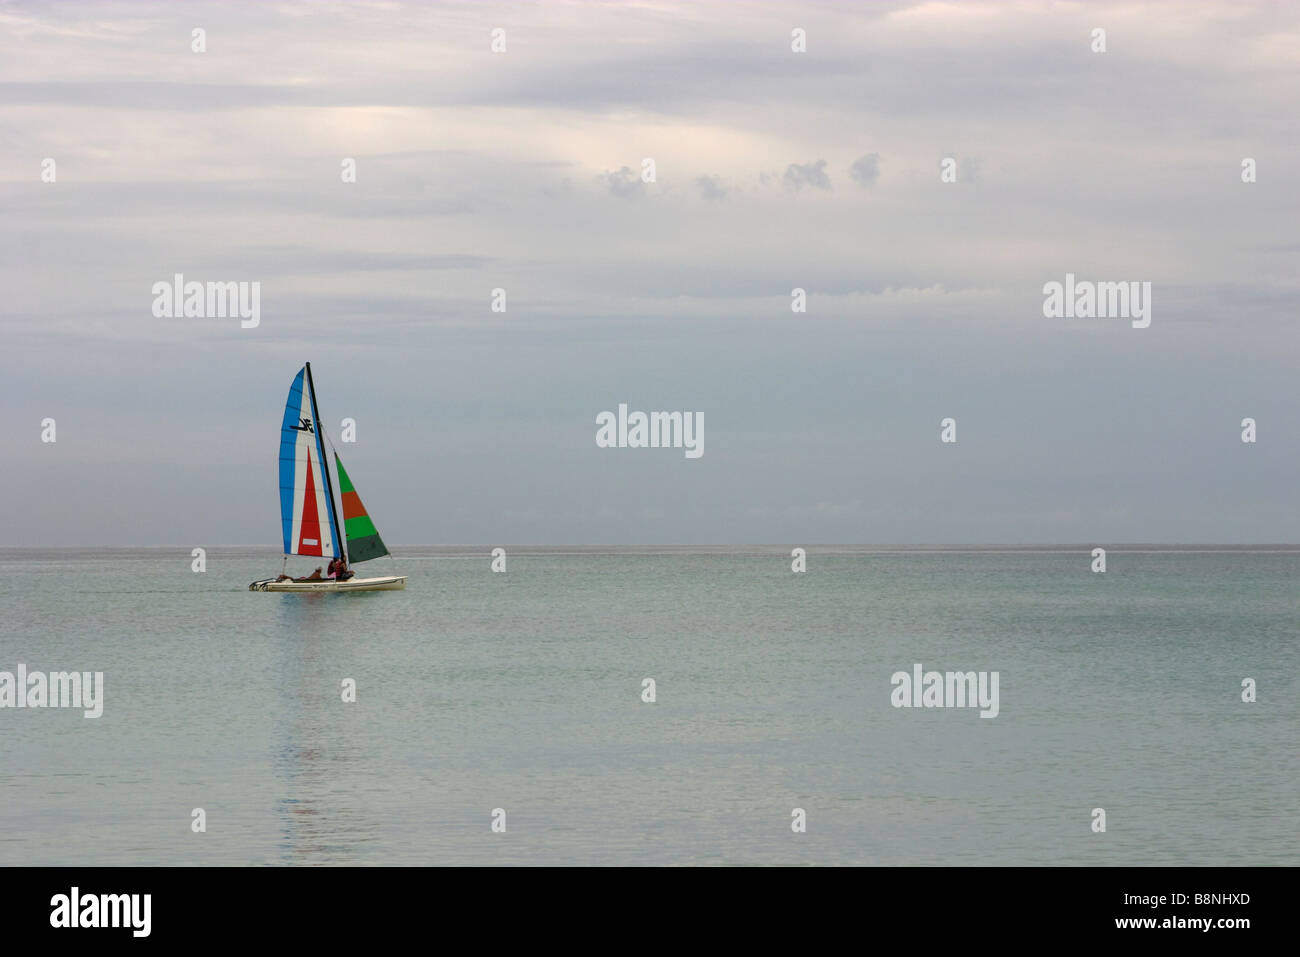 Single sailing pleasure yacht, caribbean sea, cuba Stock Photo